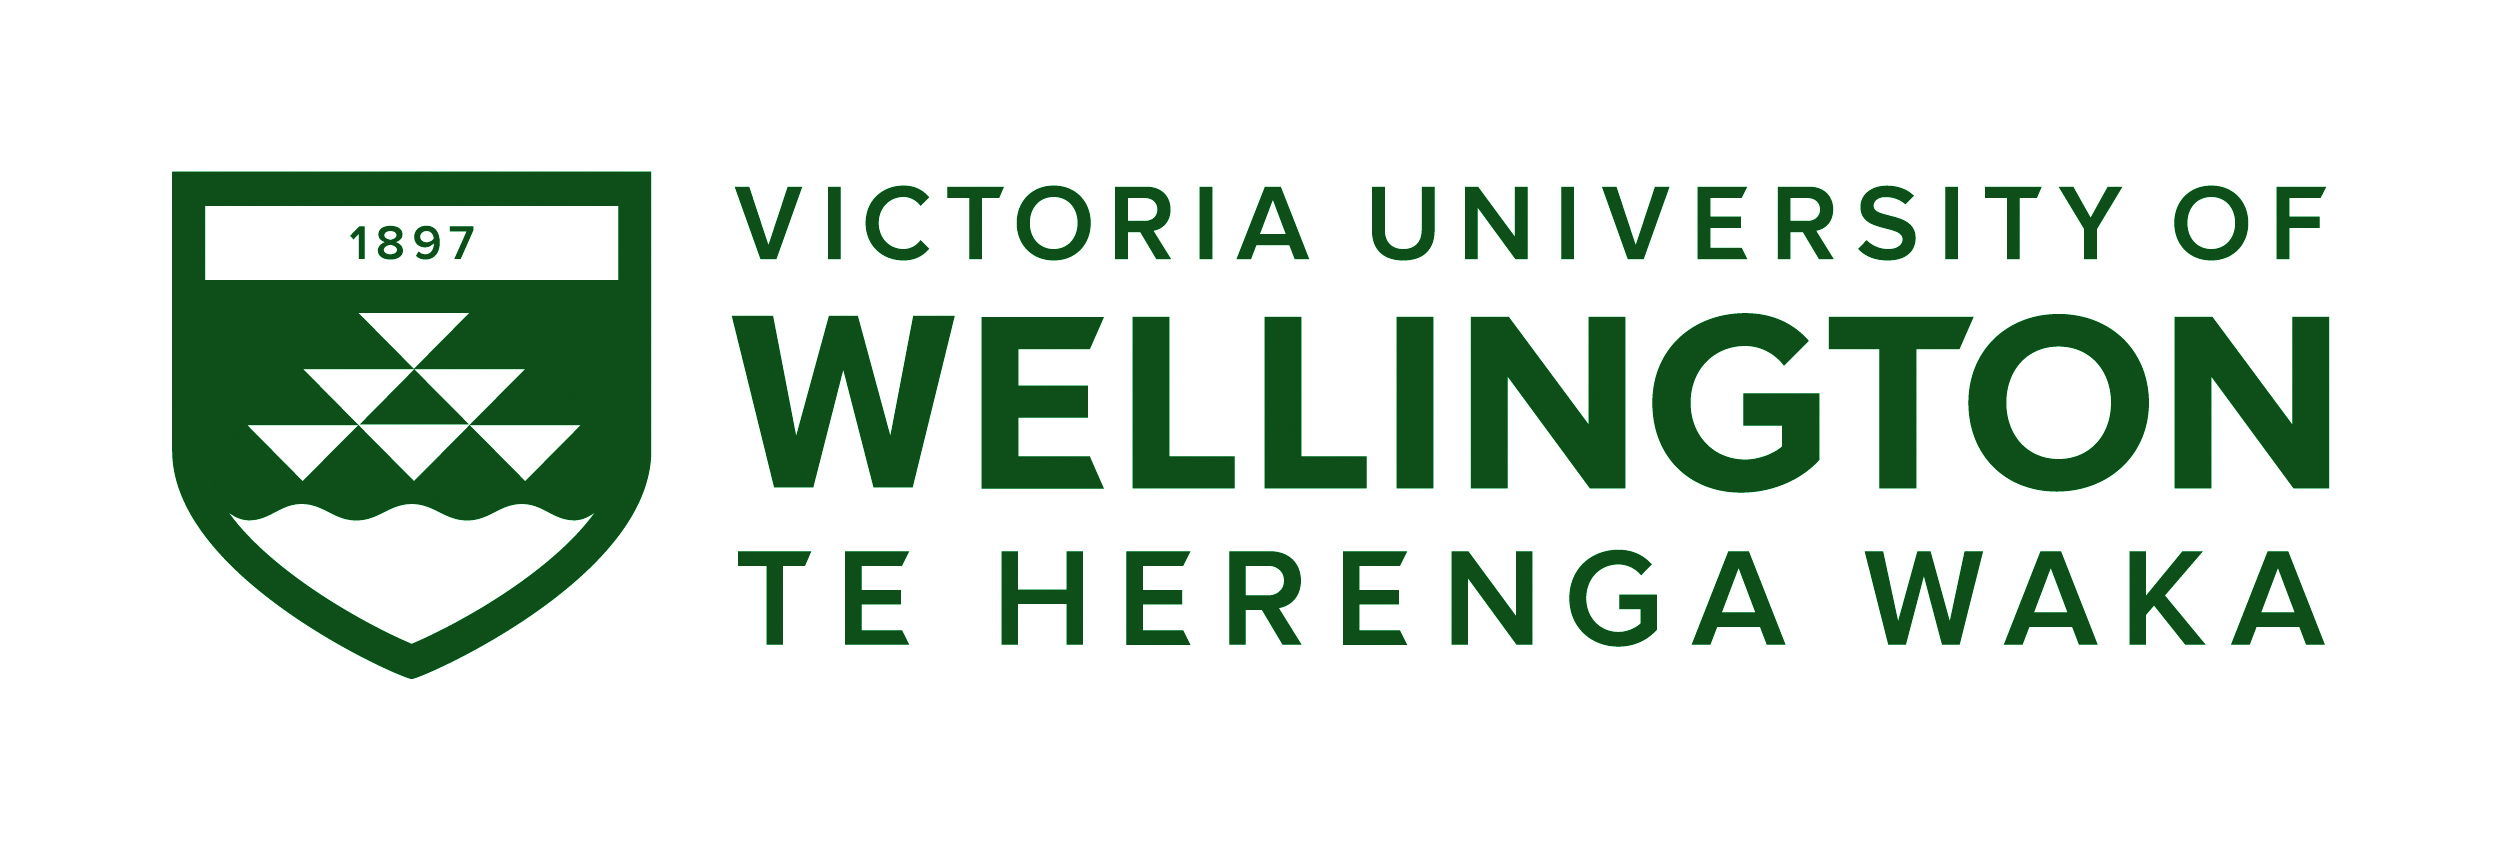 Victoria University of Wellington - Te Herenga Waka